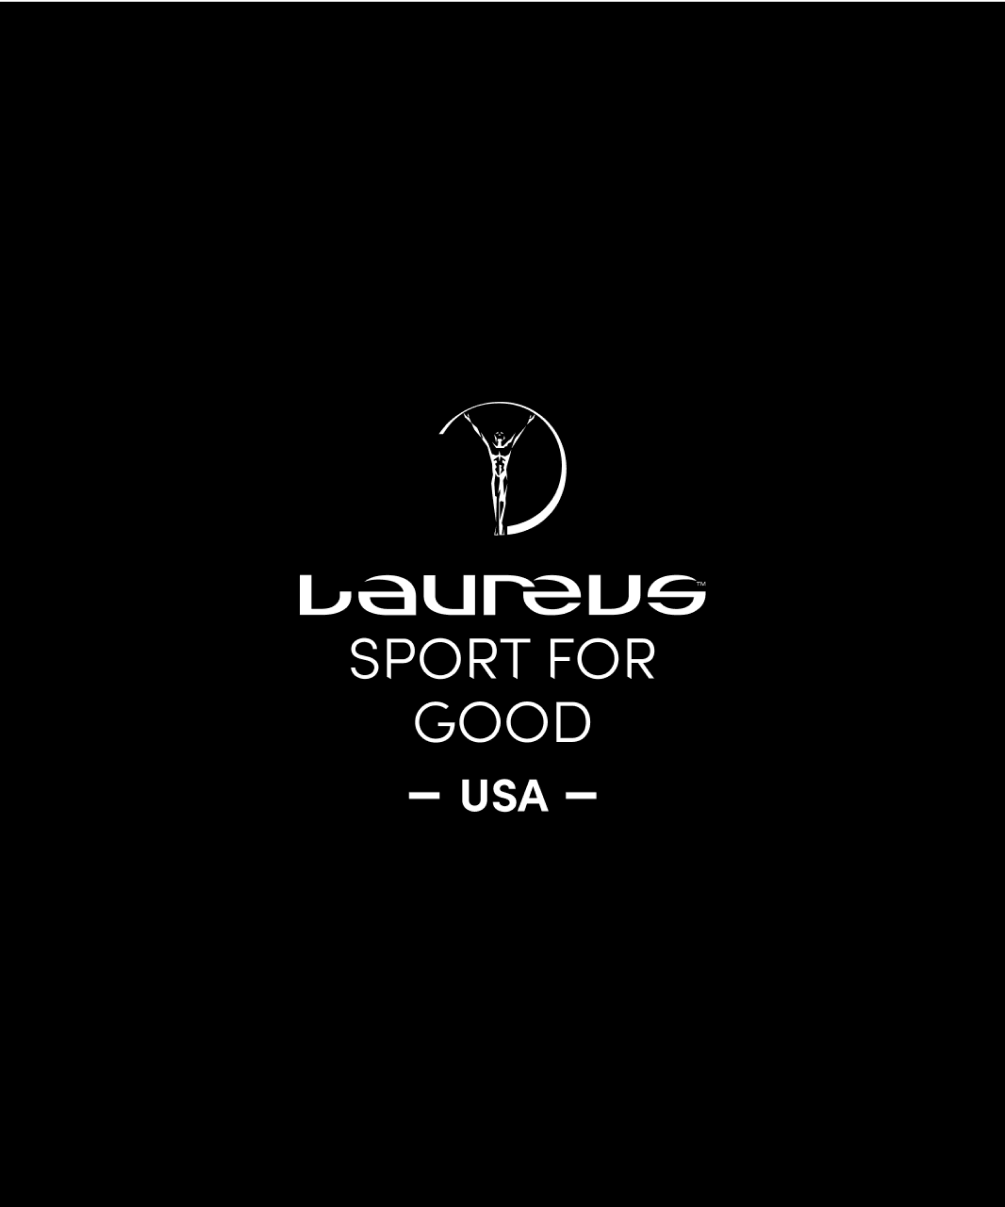 Laureus sport for good logo